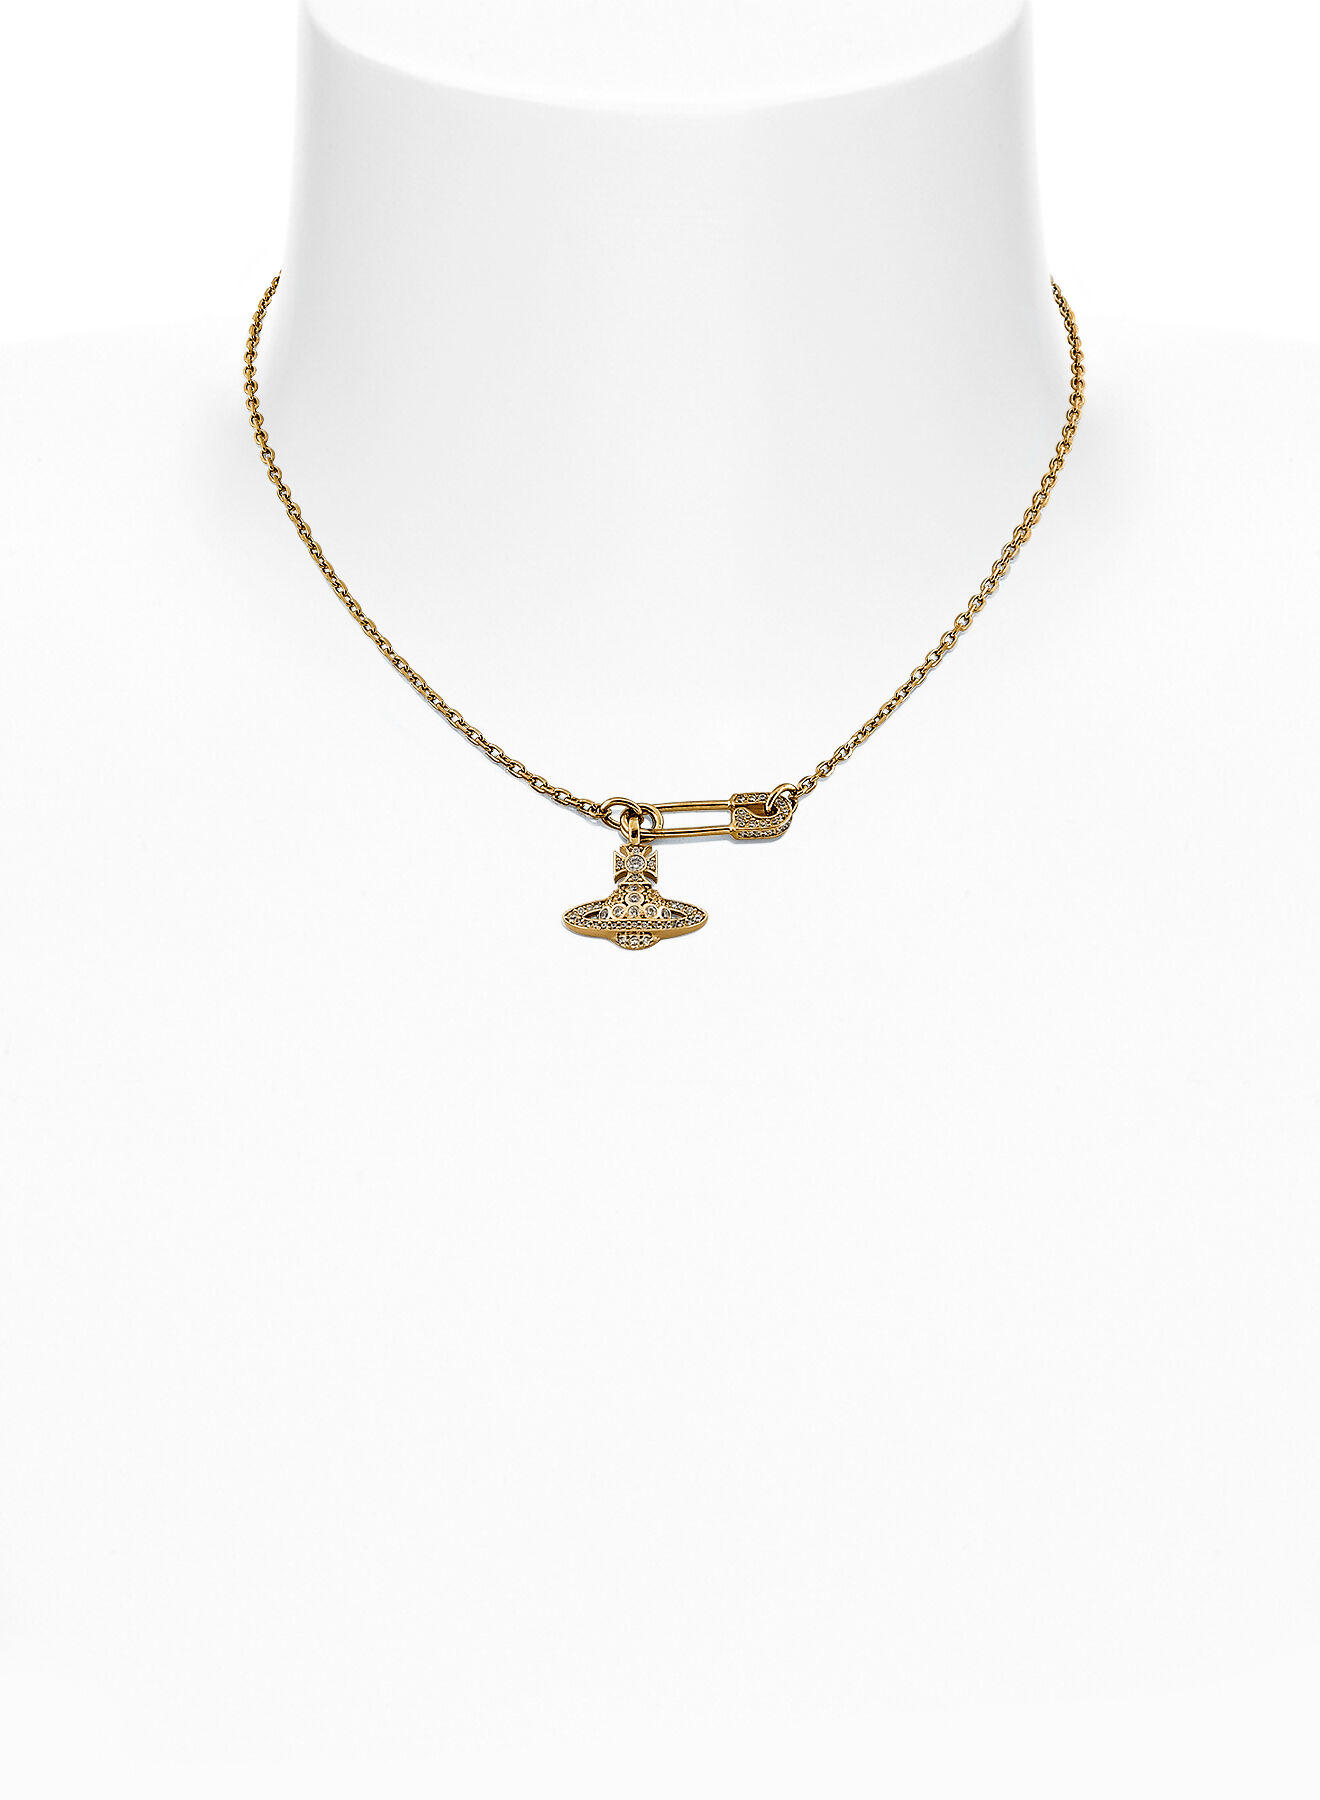 Lucrece Pendant Necklace in GOLD-White-CZ | Vivienne Westwood®